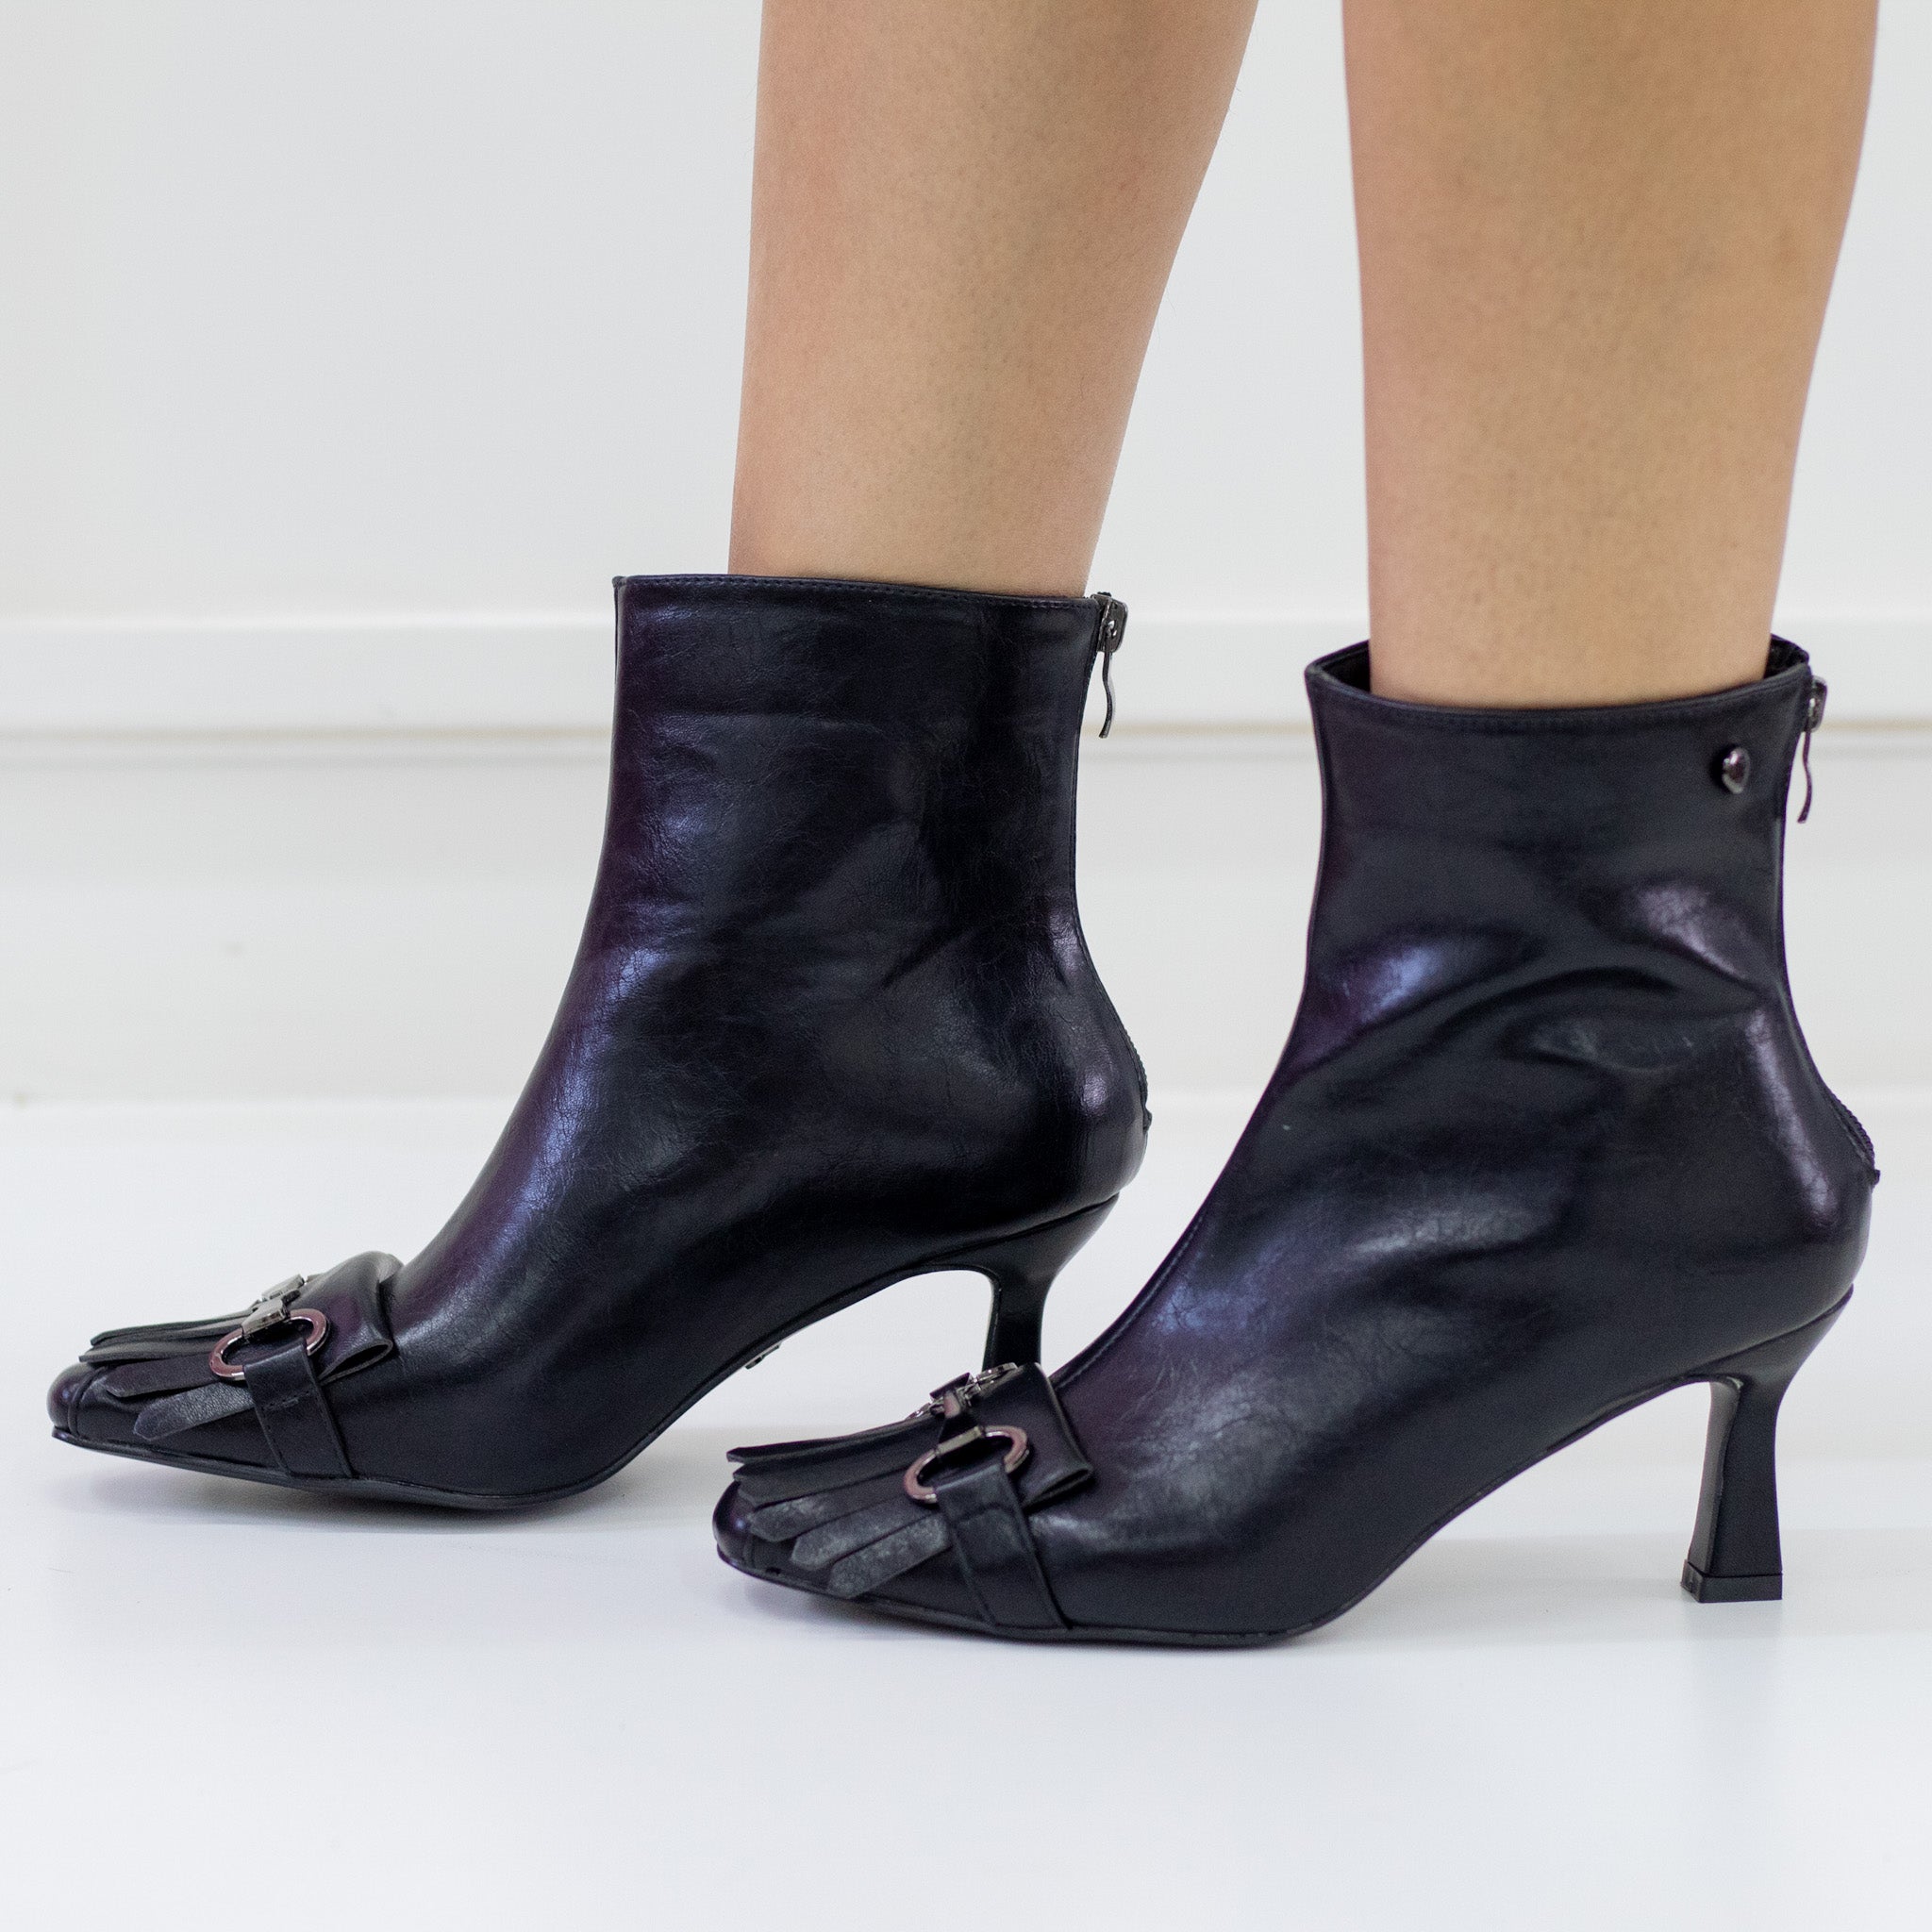 Black 7cm heel square toe bootie with tassel trim shot